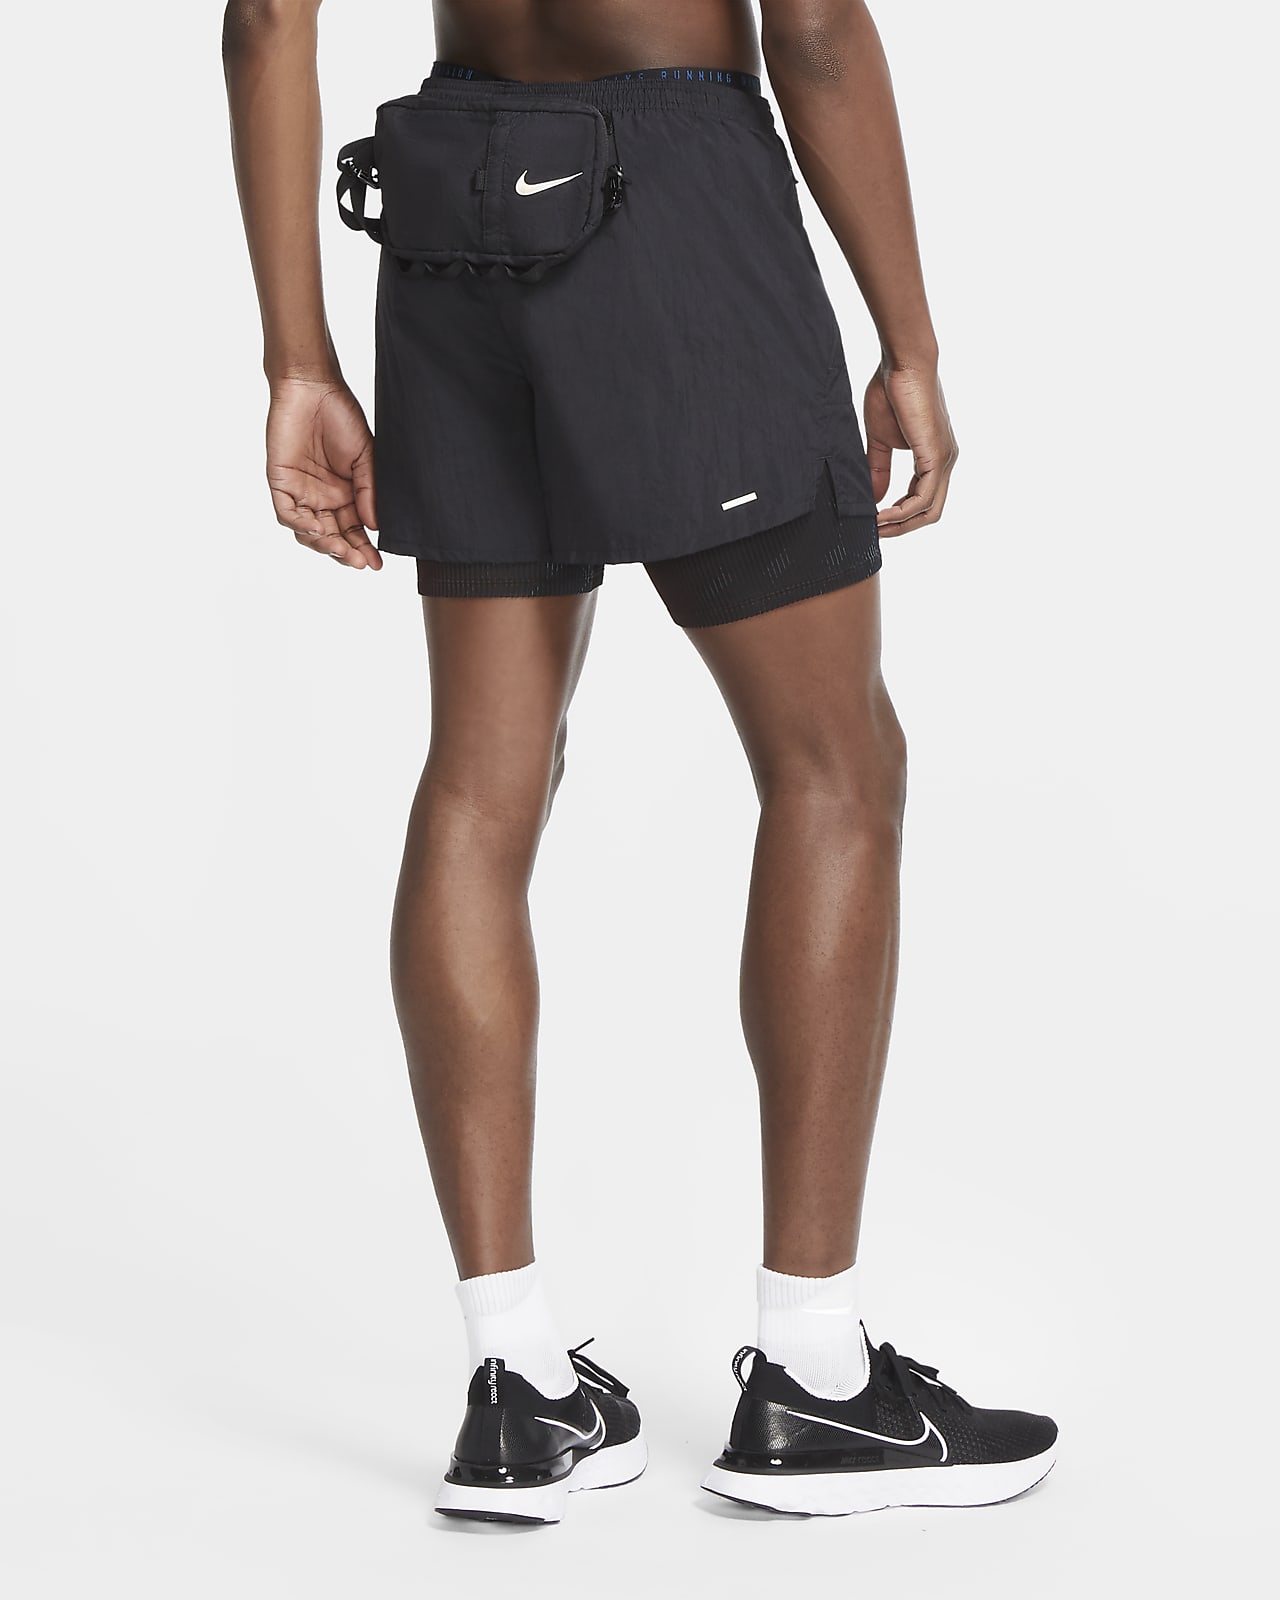 nike running shorts with phone pocket